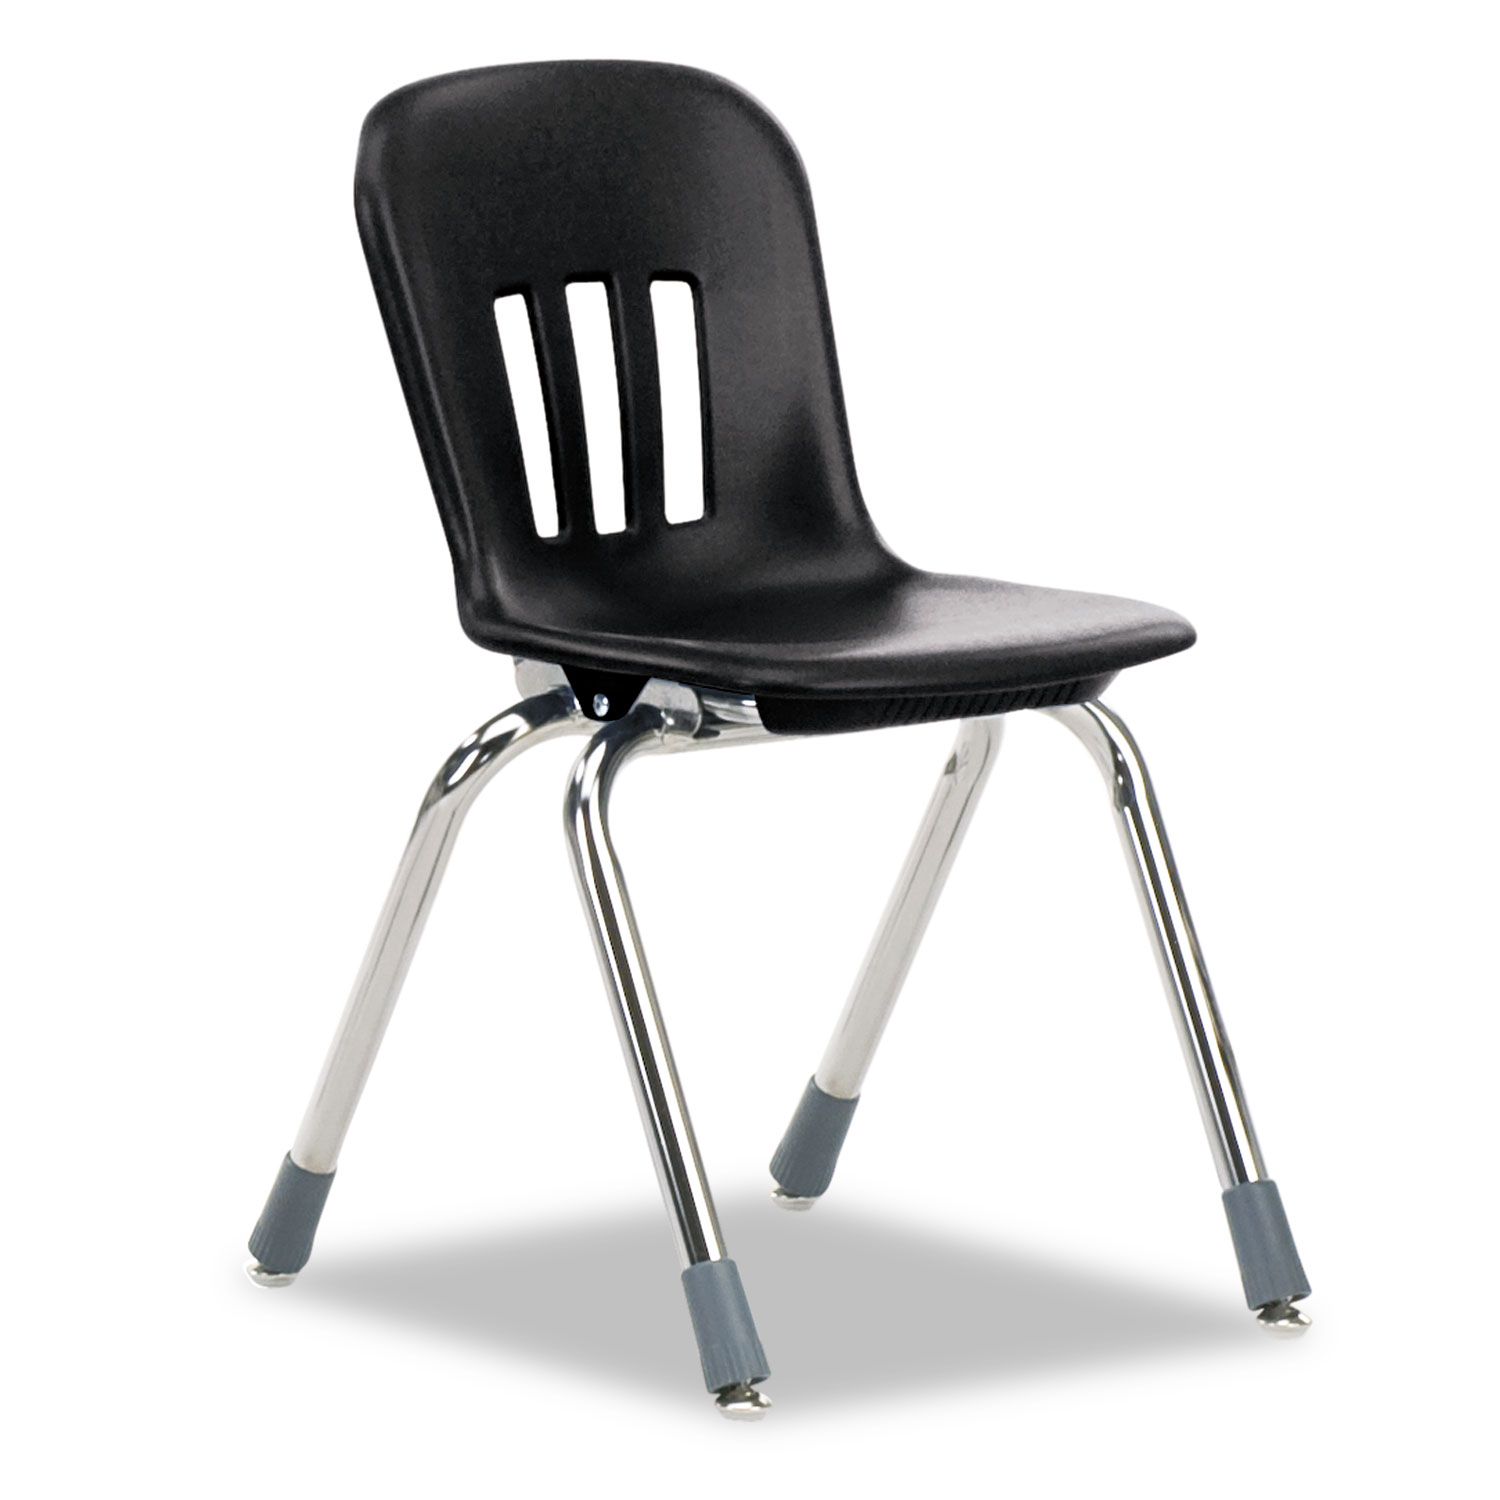 Metaphor Series Classroom Chair, 14-1/2 Seat Height, Black/Chrome, 5/Carton